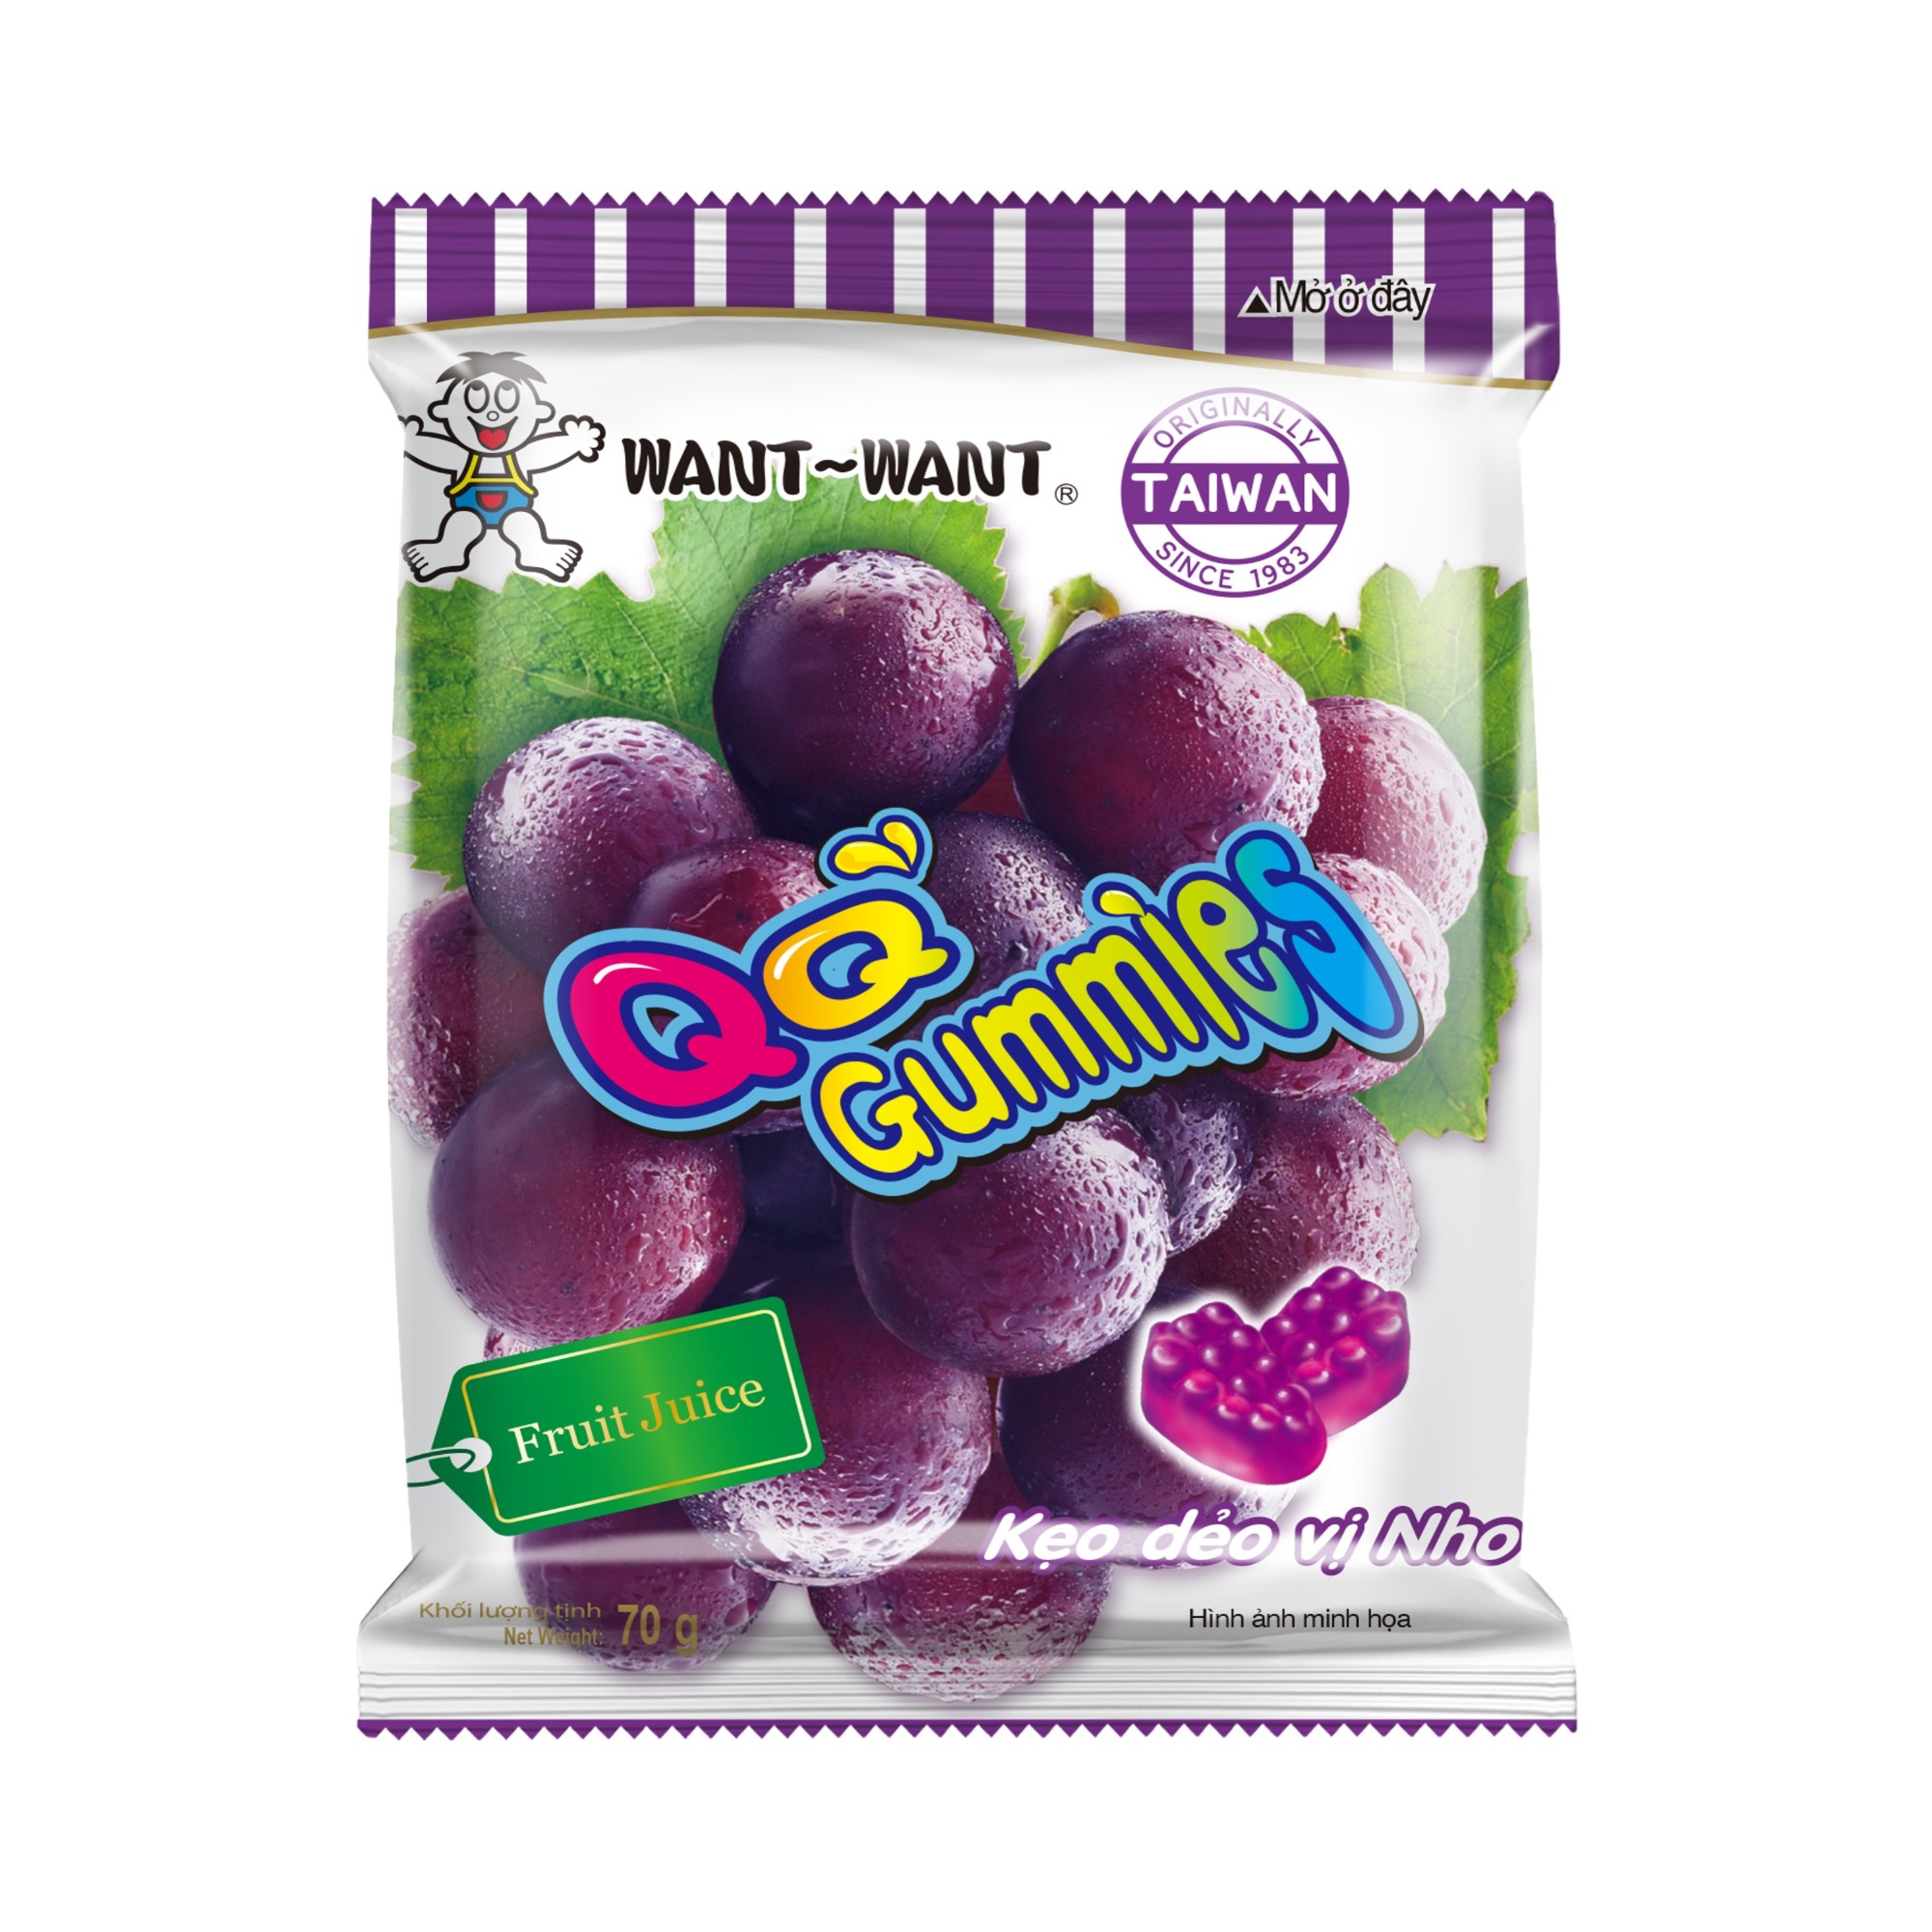 WANT WANT QQ Gummies Blueberry Flavor 20g, 70g